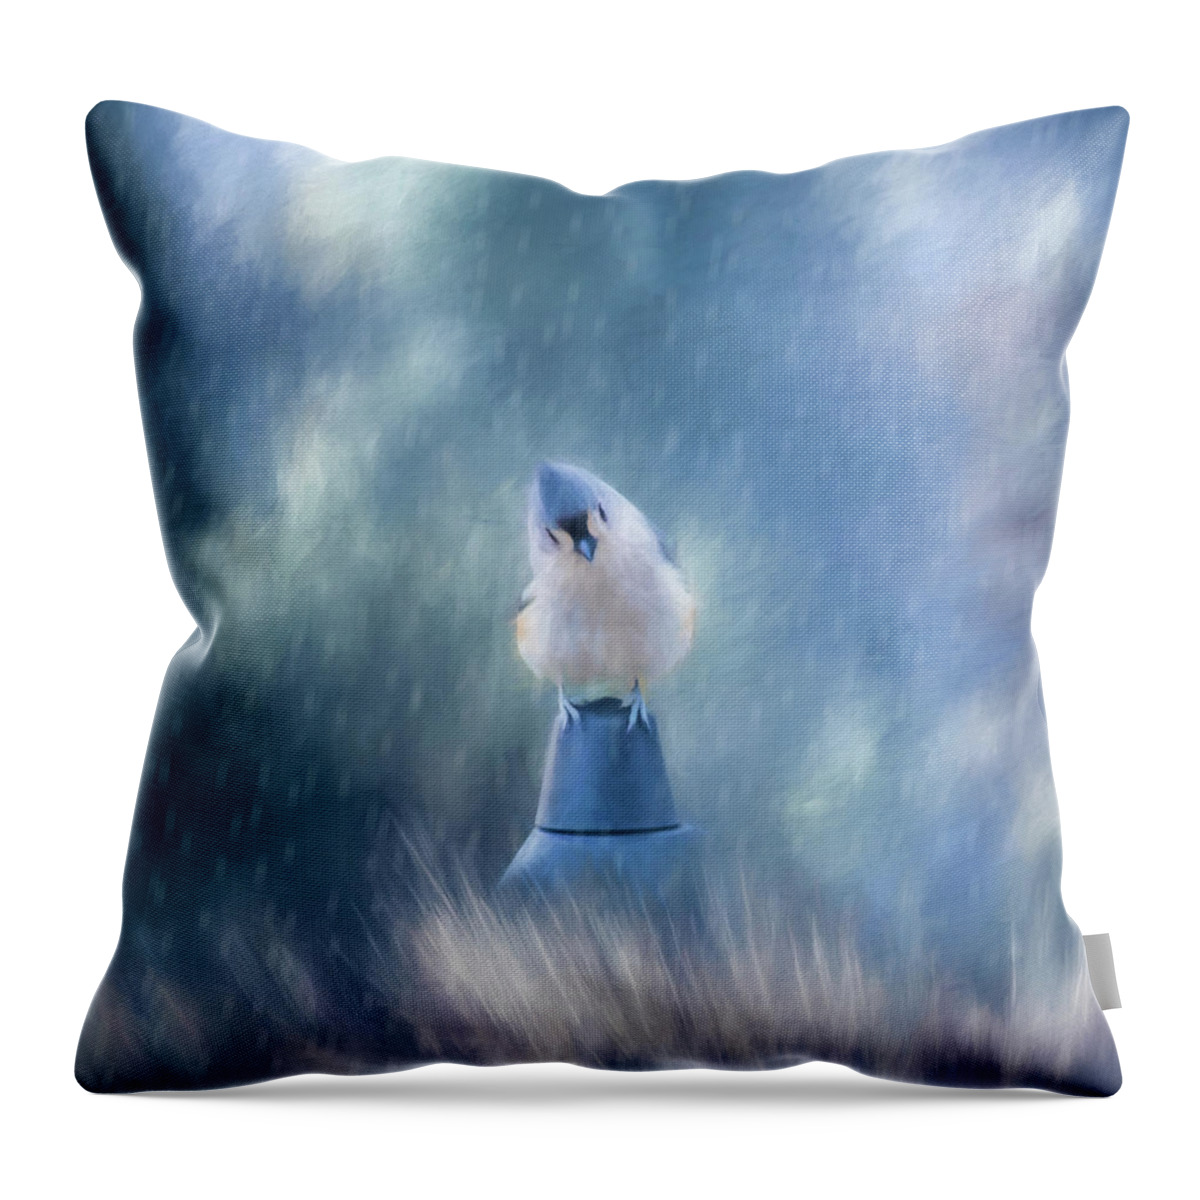 Bird Throw Pillow featuring the photograph April Showers by Cathy Kovarik